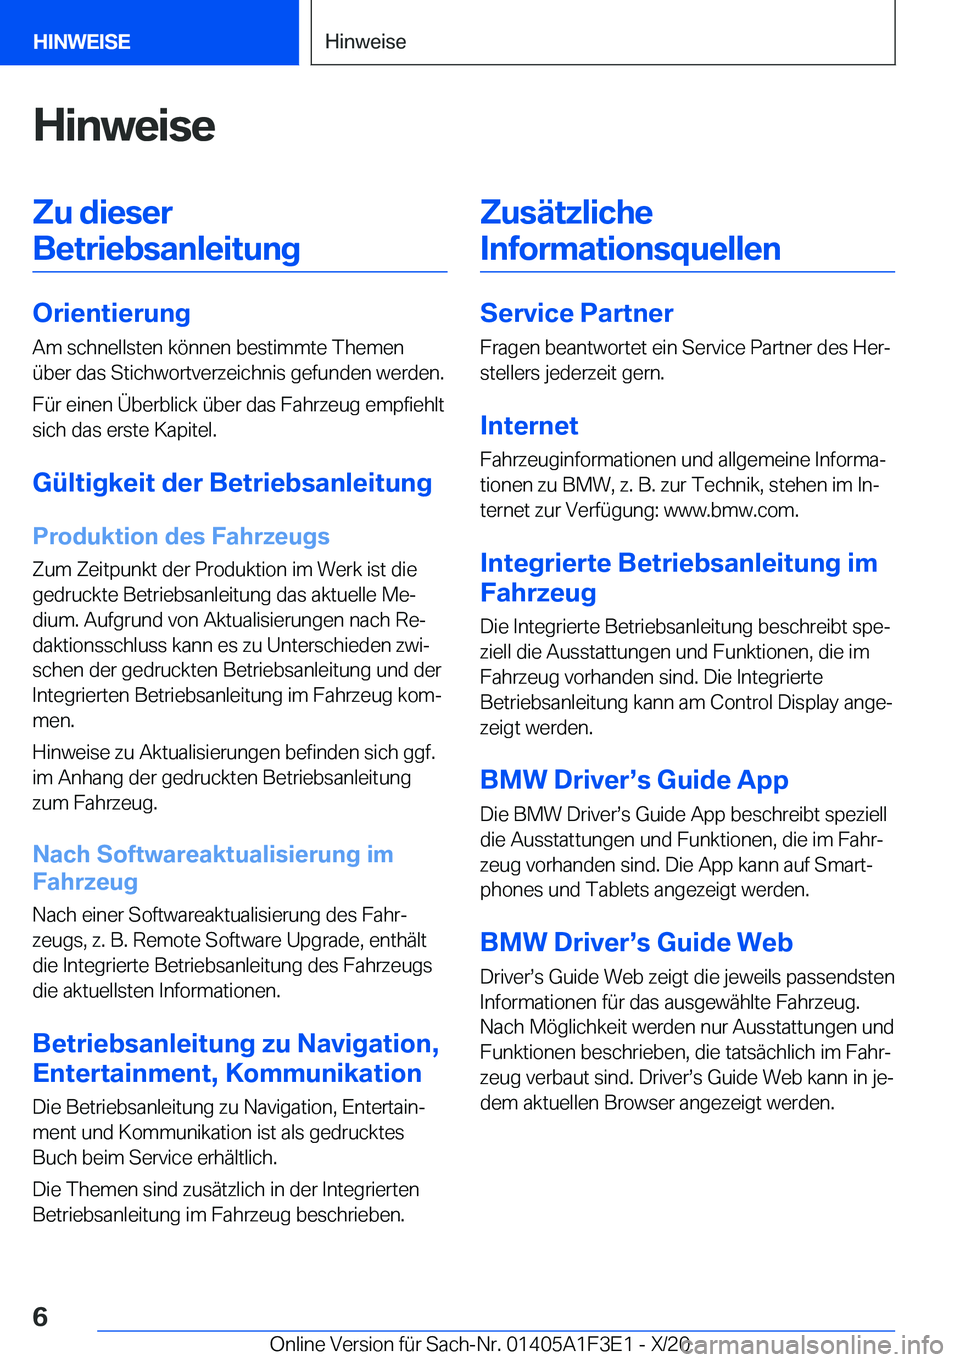 BMW X5 2021  Betriebsanleitungen (in German) �H�i�n�w�e�i�s�e�Z�u��d�i�e�s�e�r�B�e�t�r�i�e�b�s�a�n�l�e�i�t�u�n�g
�O�r�i�e�n�t�i�e�r�u�n�g �A�m��s�c�h�n�e�l�l�s�t�e�n��k�